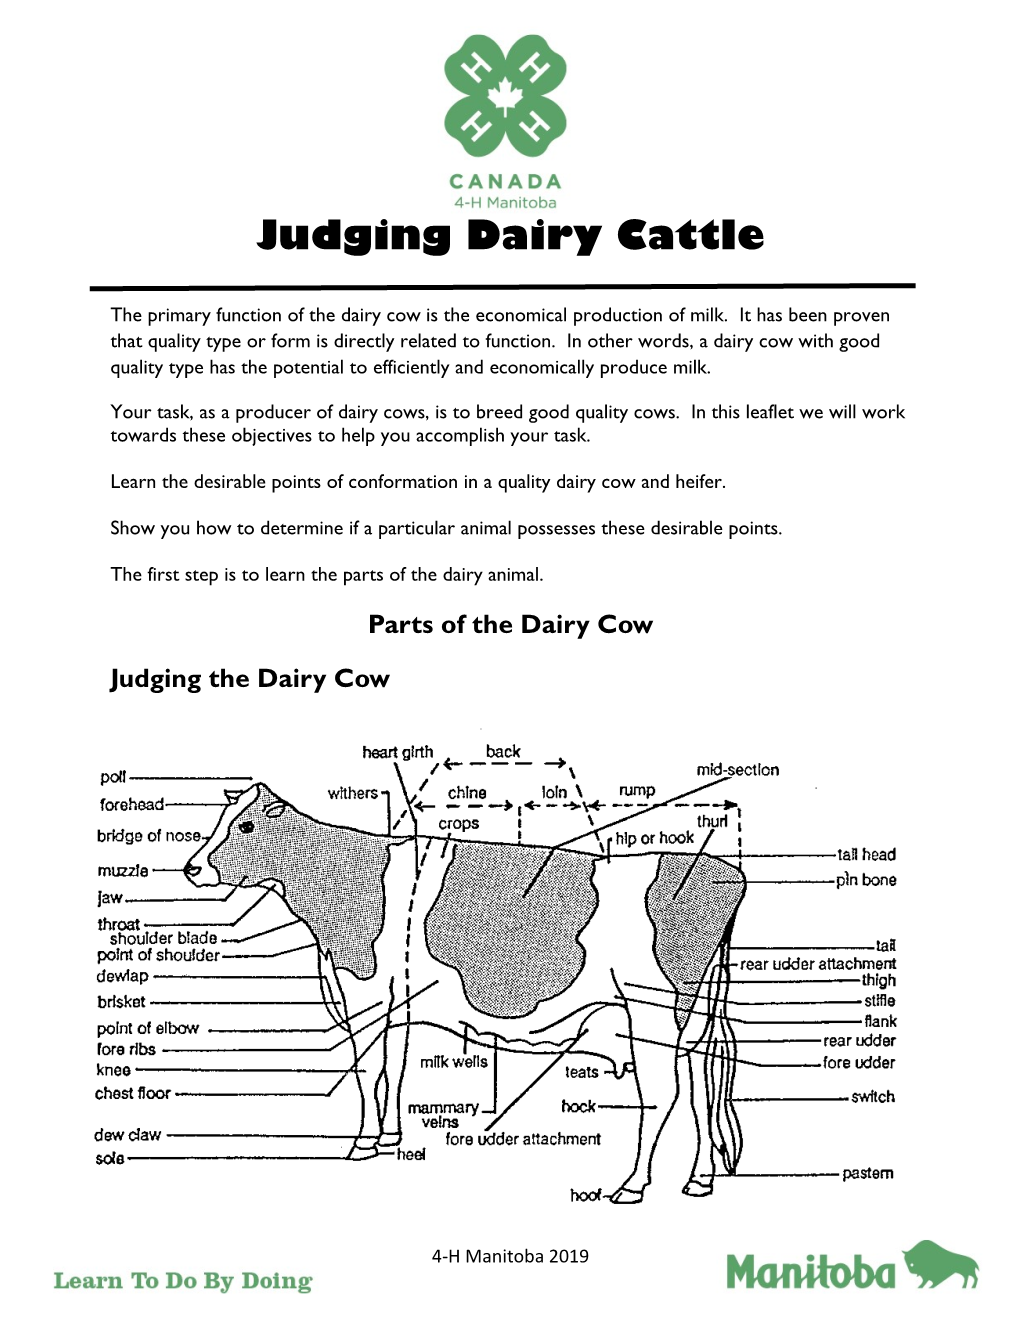 Judging Dairy Cattle